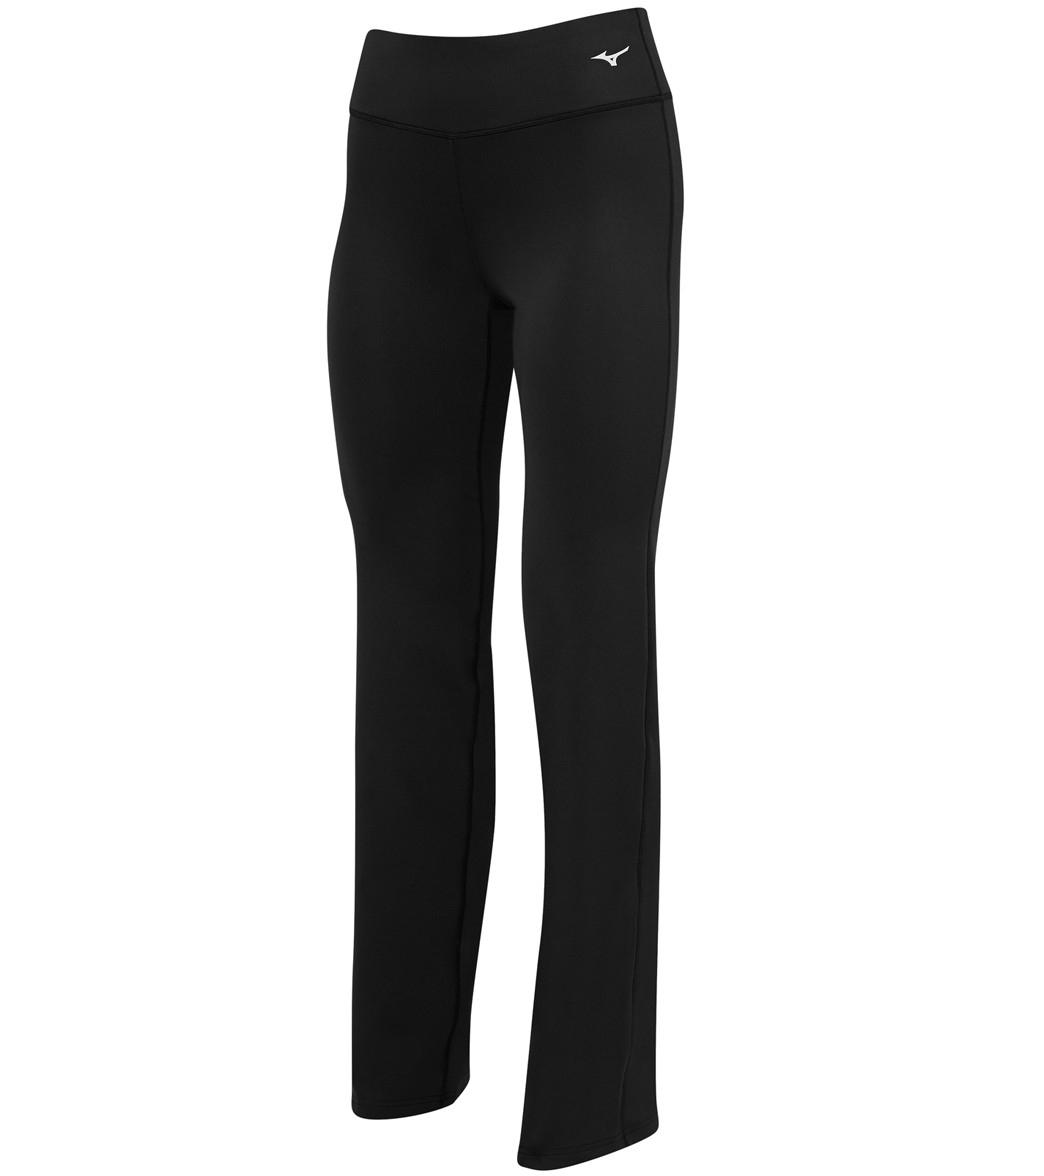 Mizuno Women's Align Long Volleyball Pants - Black Medium - Swimoutlet.com